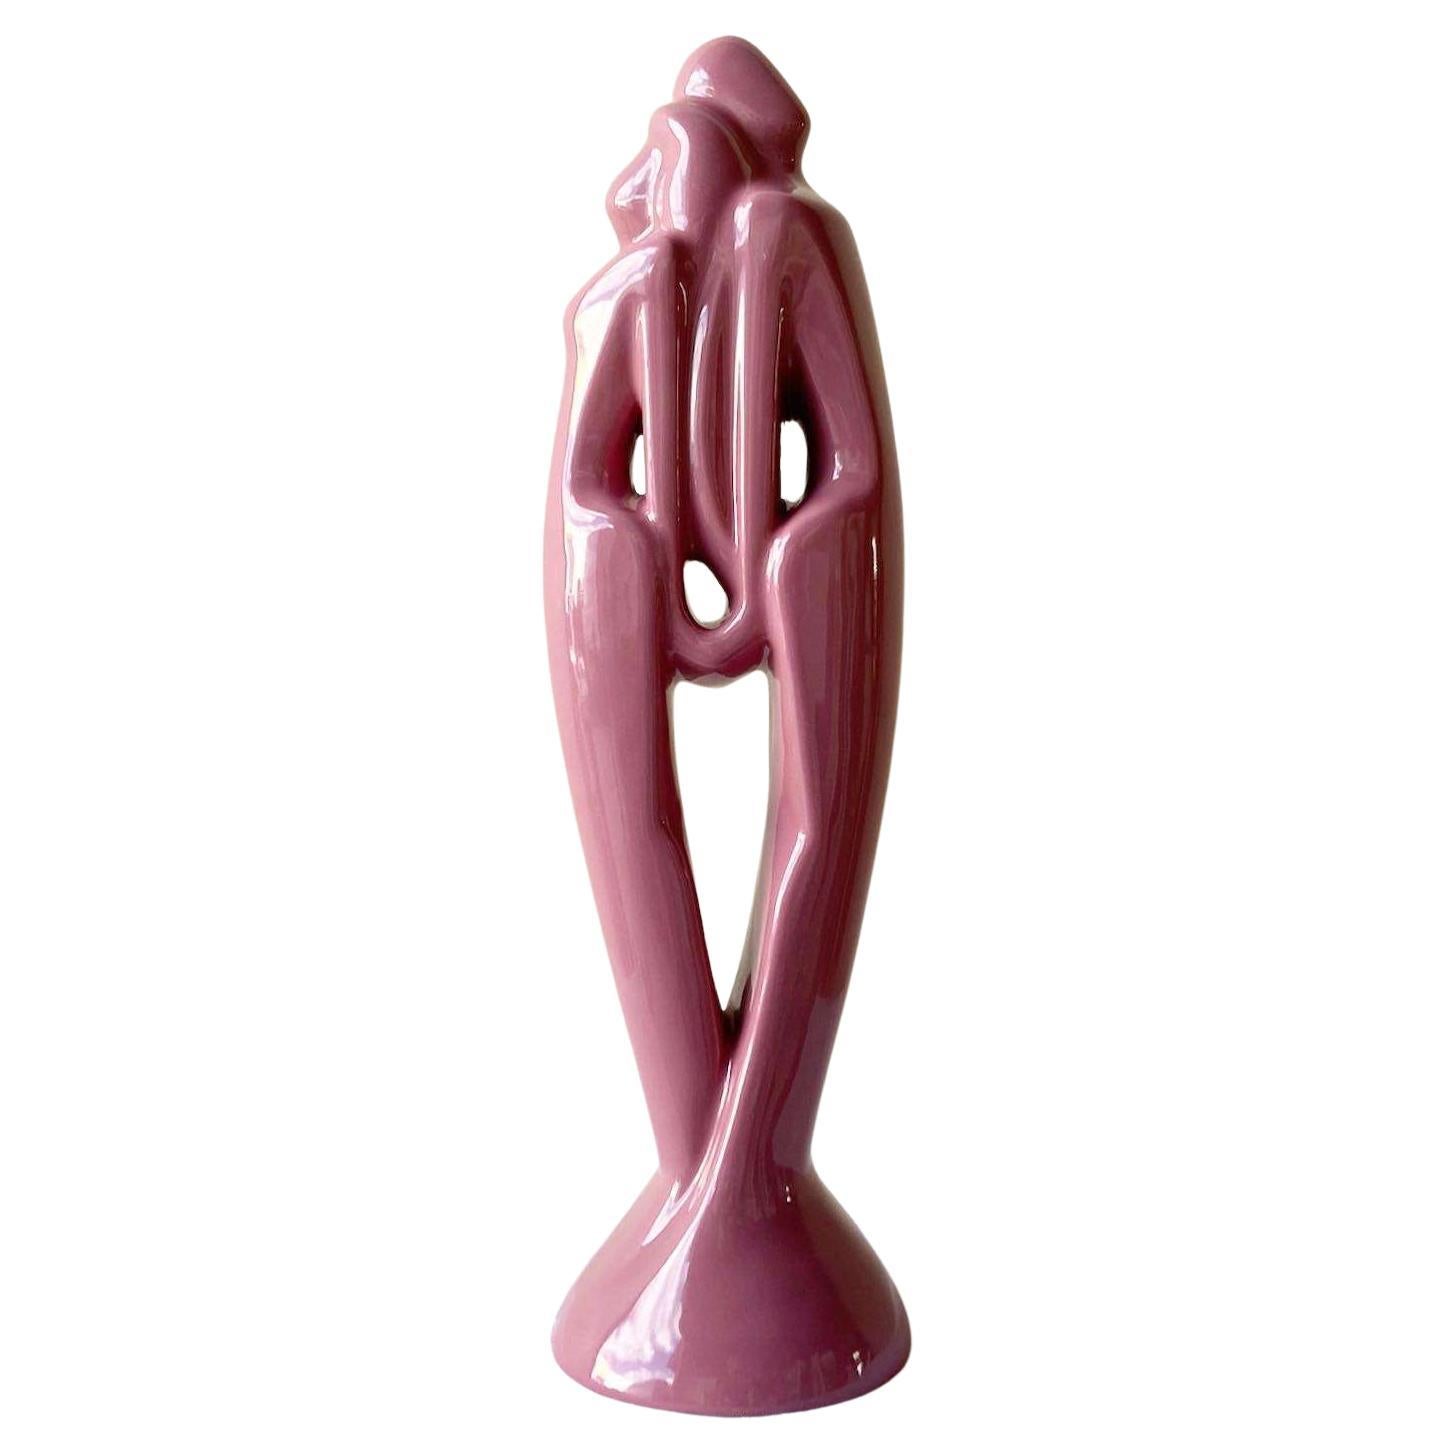 Sculpture postmoderne en céramique rose de style Haeger